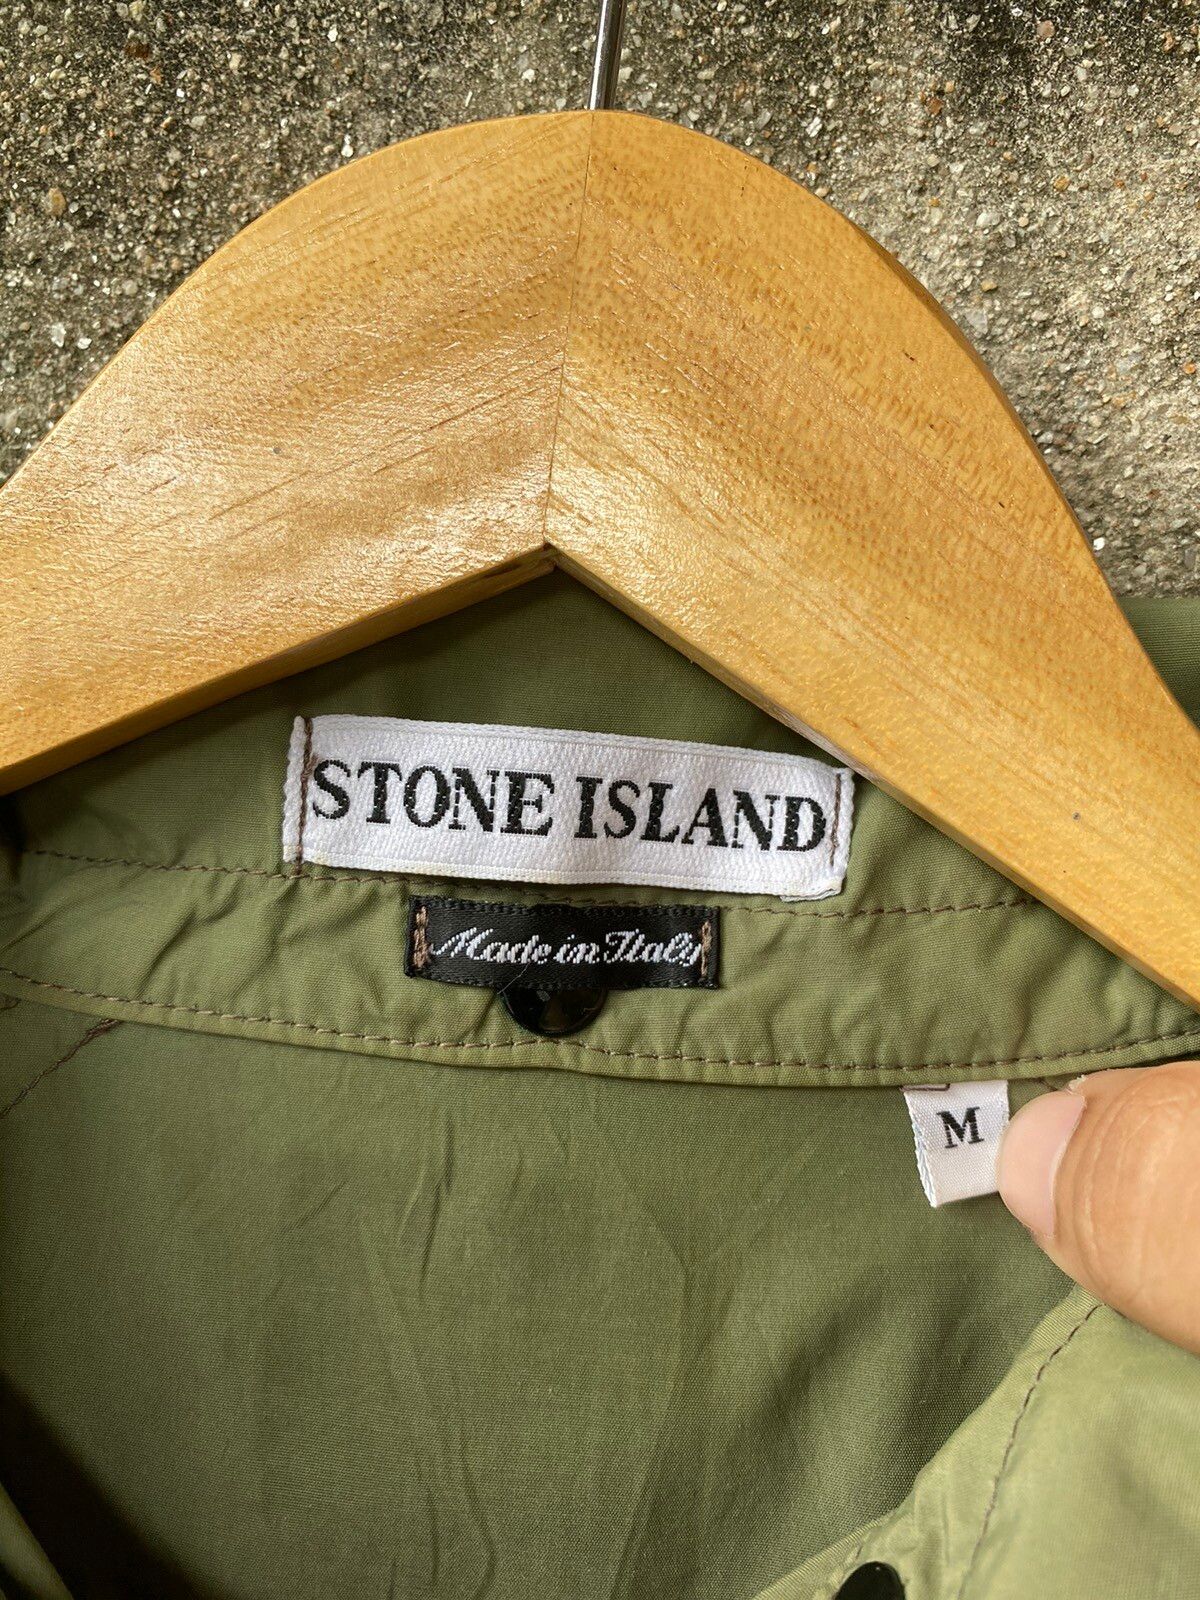 Stone Island SS98 Overshirt Olive Green - 8